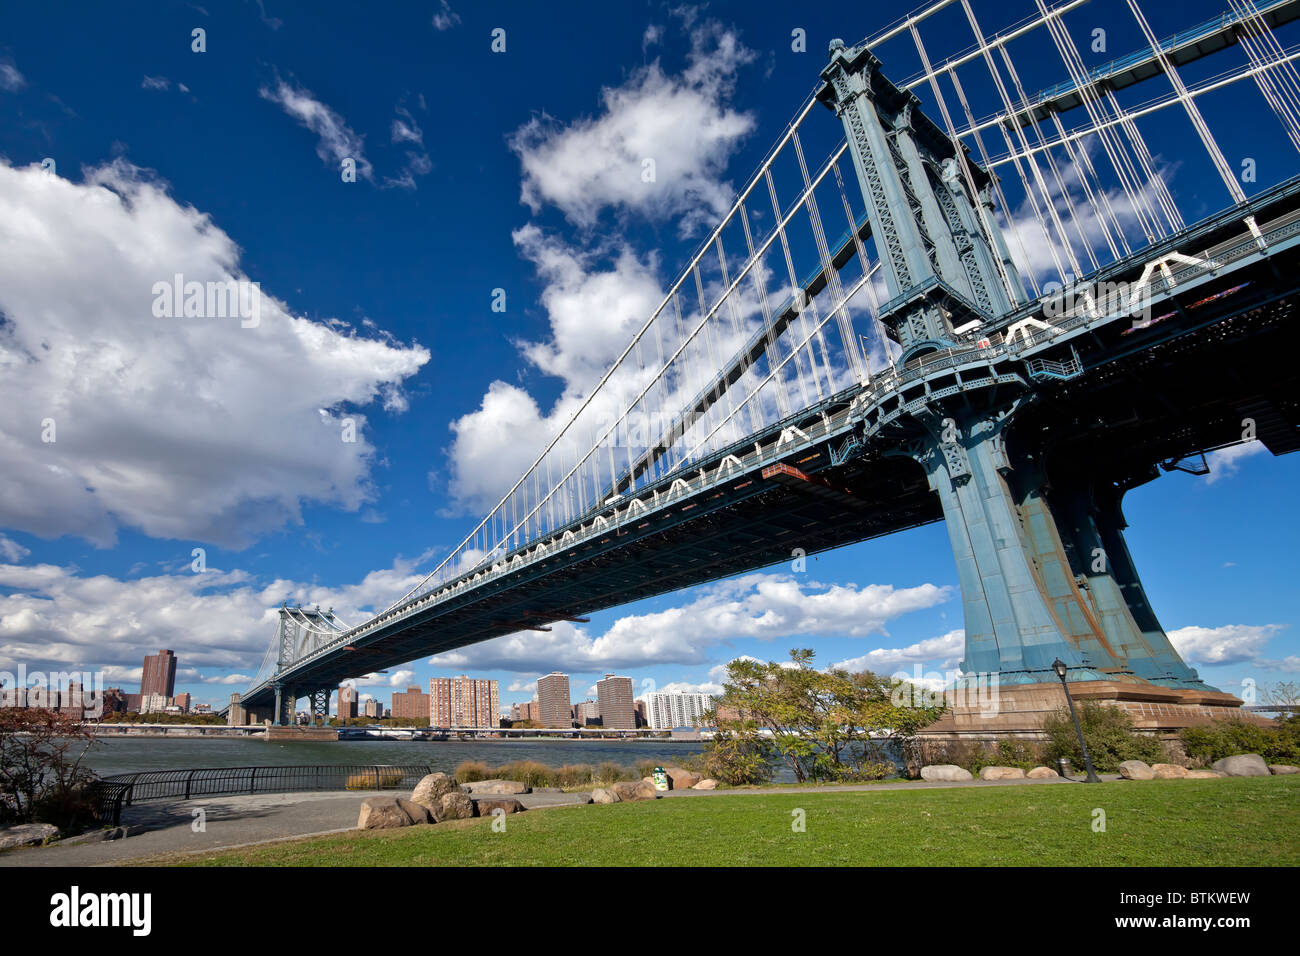 Manhattan Bridge in New York Stock Photo - Alamy